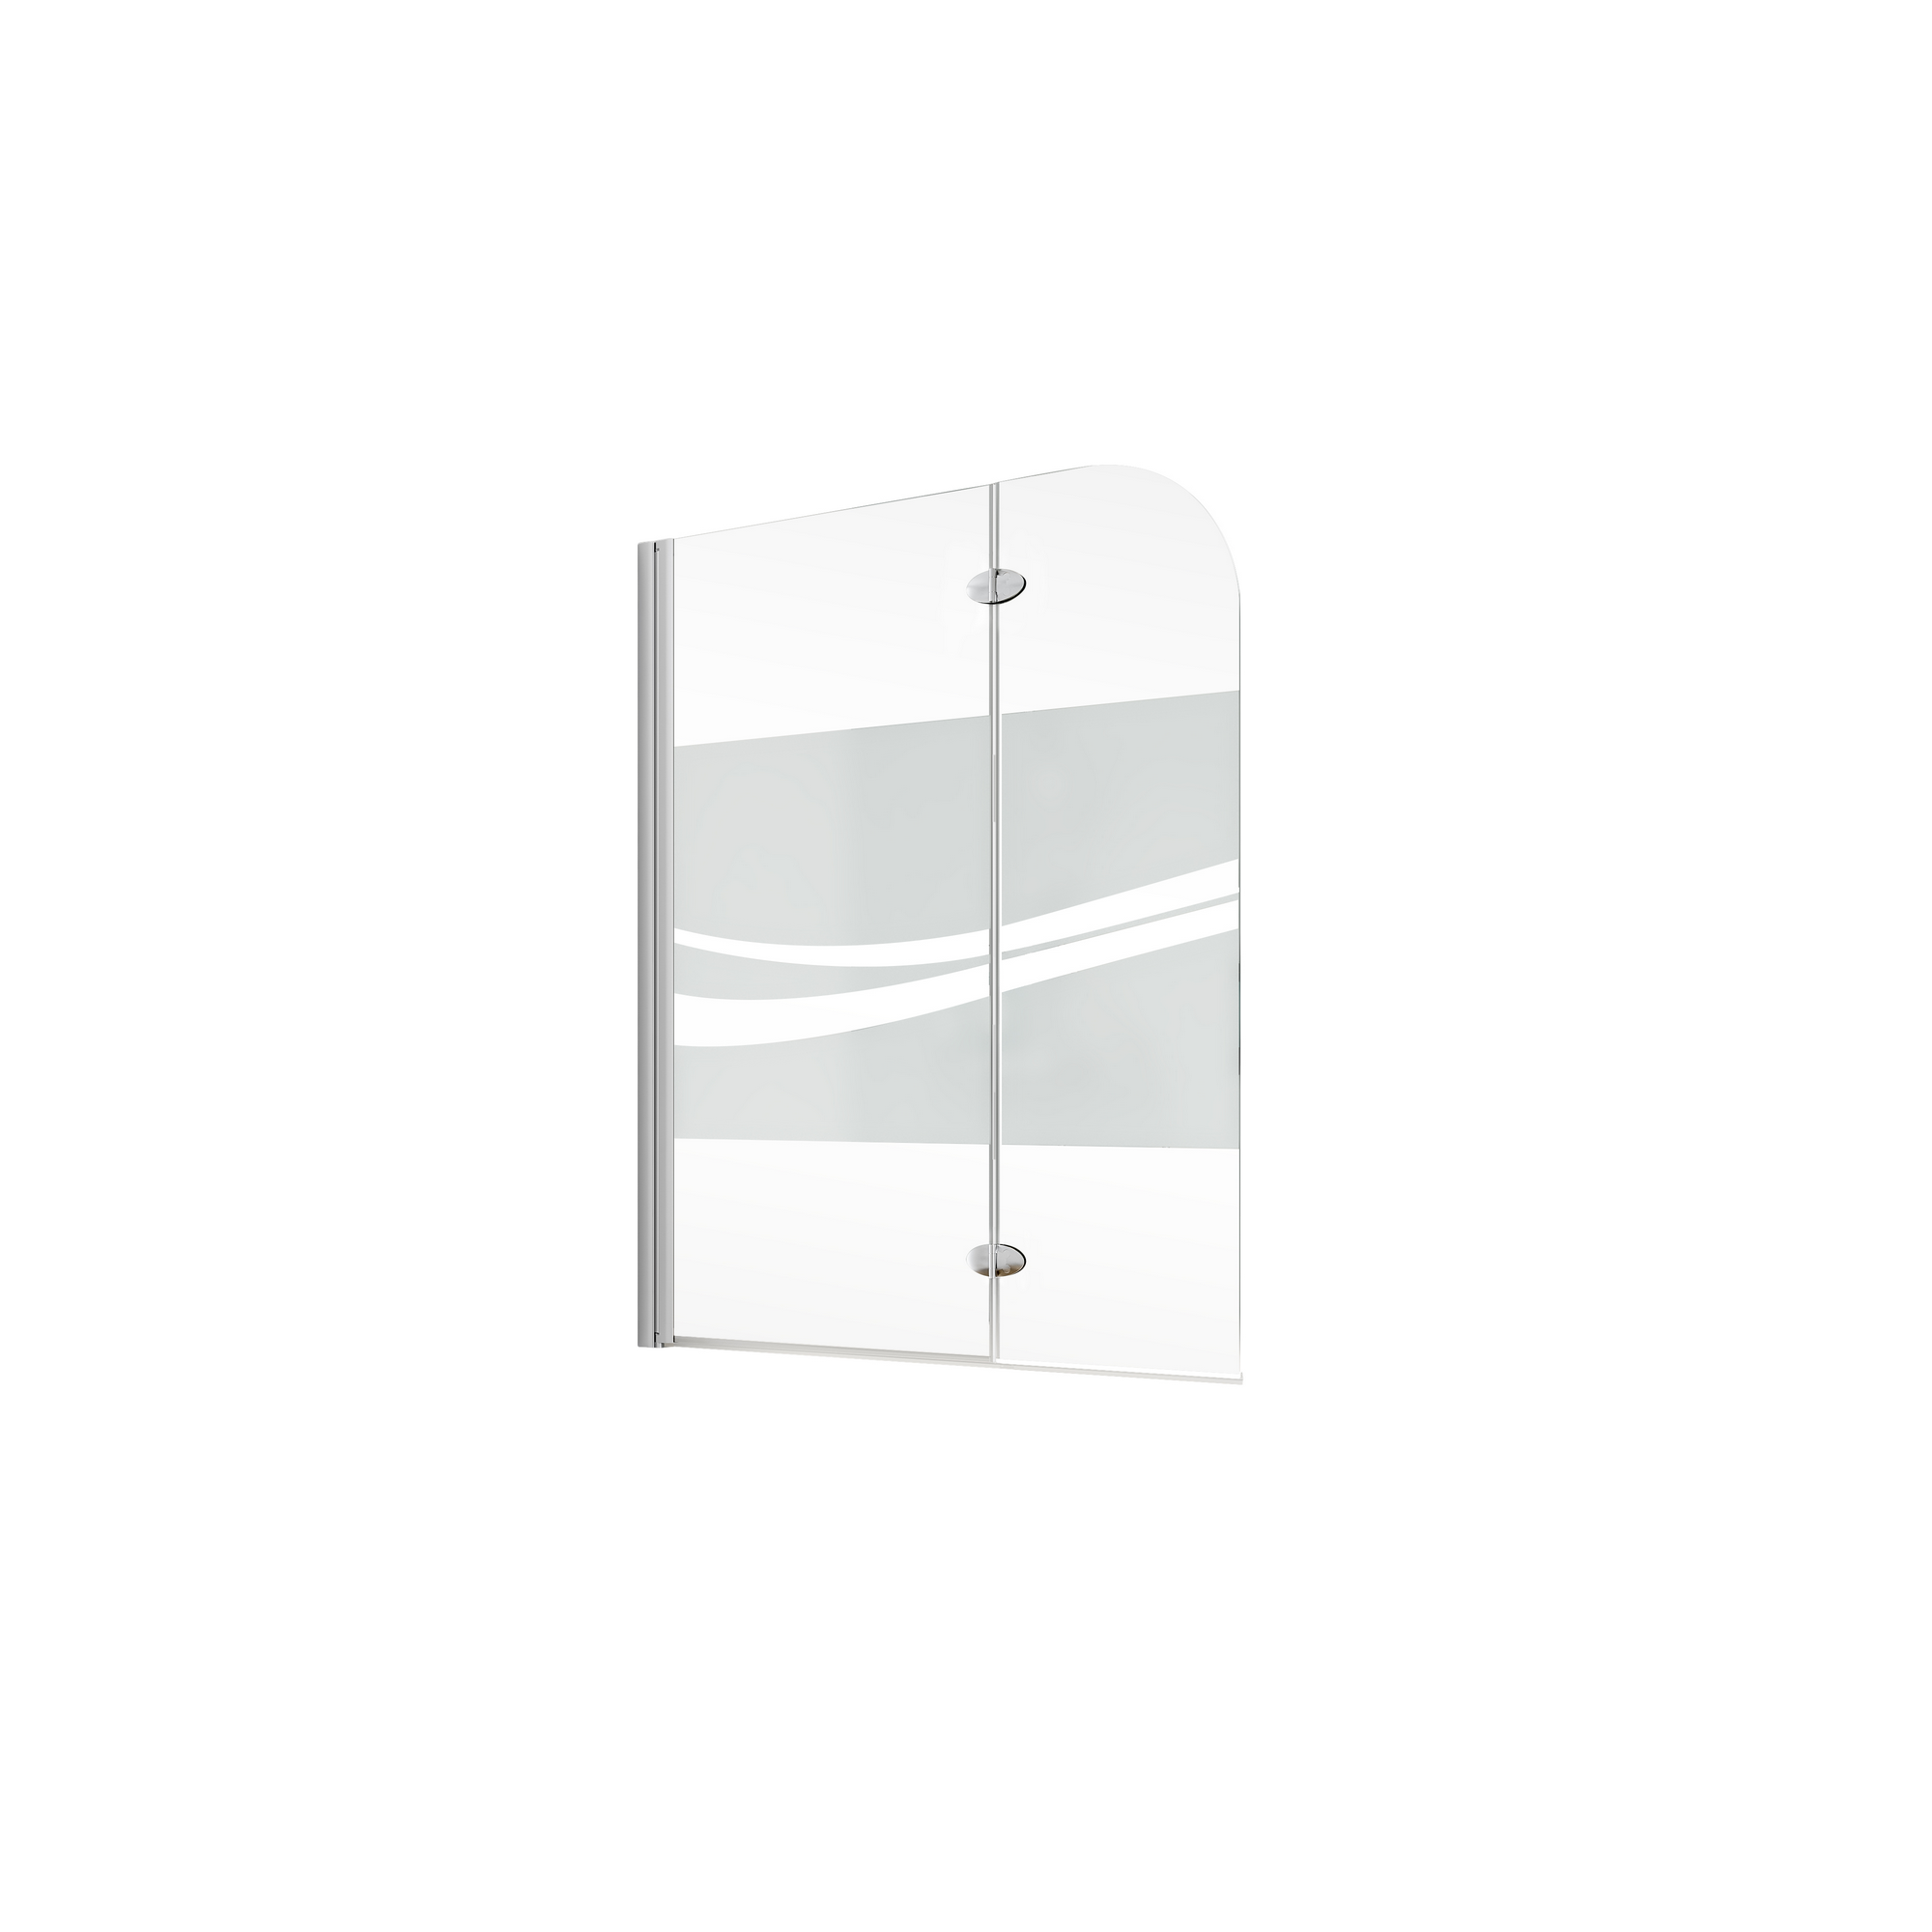 Badewannenfaltwand 'Komfort' Liane-Dekor quer, aluminiumfarben, 112 x 140 cm, 2-teilig + product picture